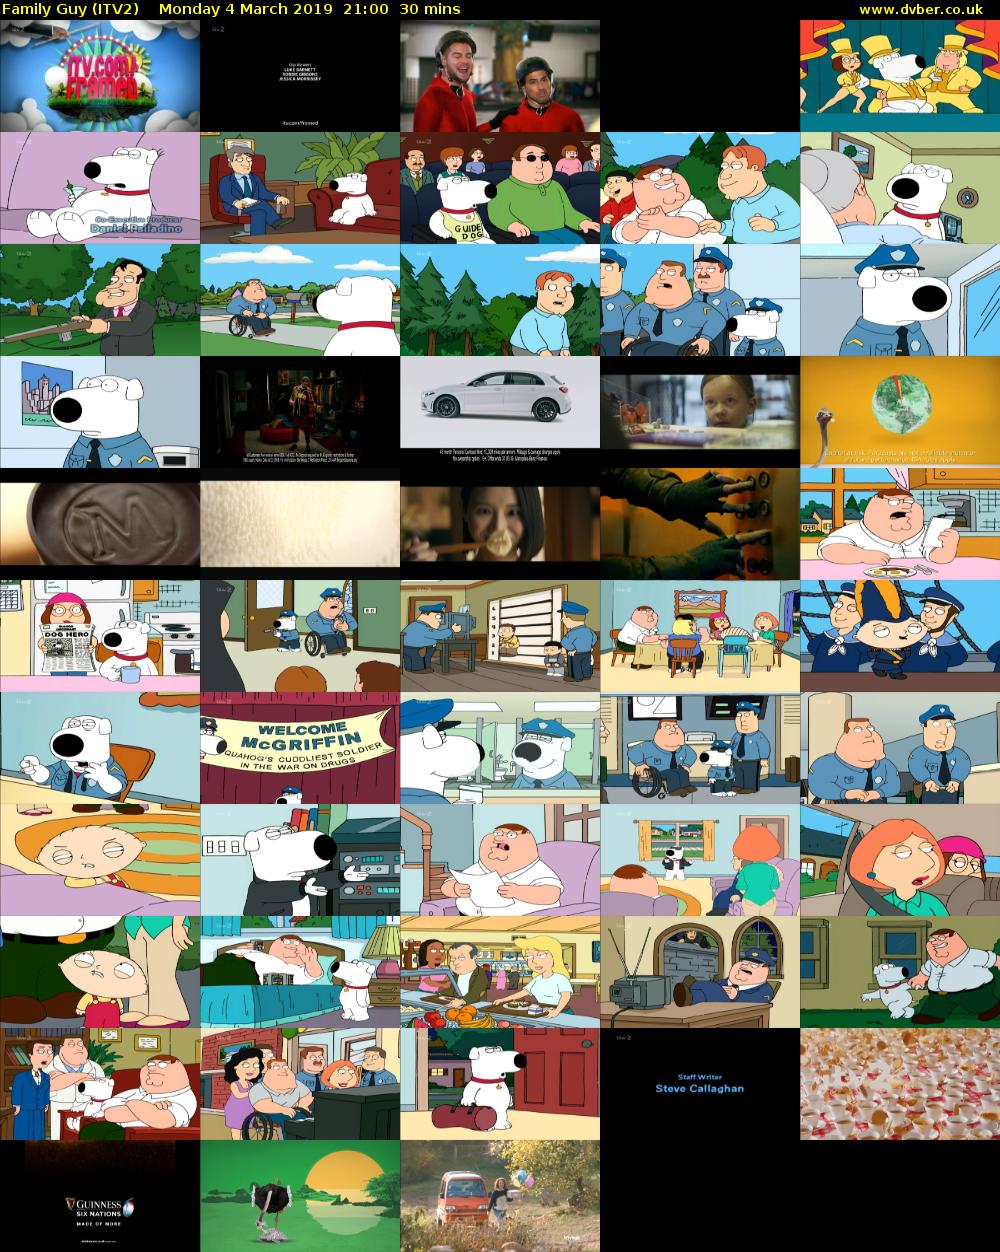 Family Guy (ITV2) Monday 4 March 2019 21:00 - 21:30